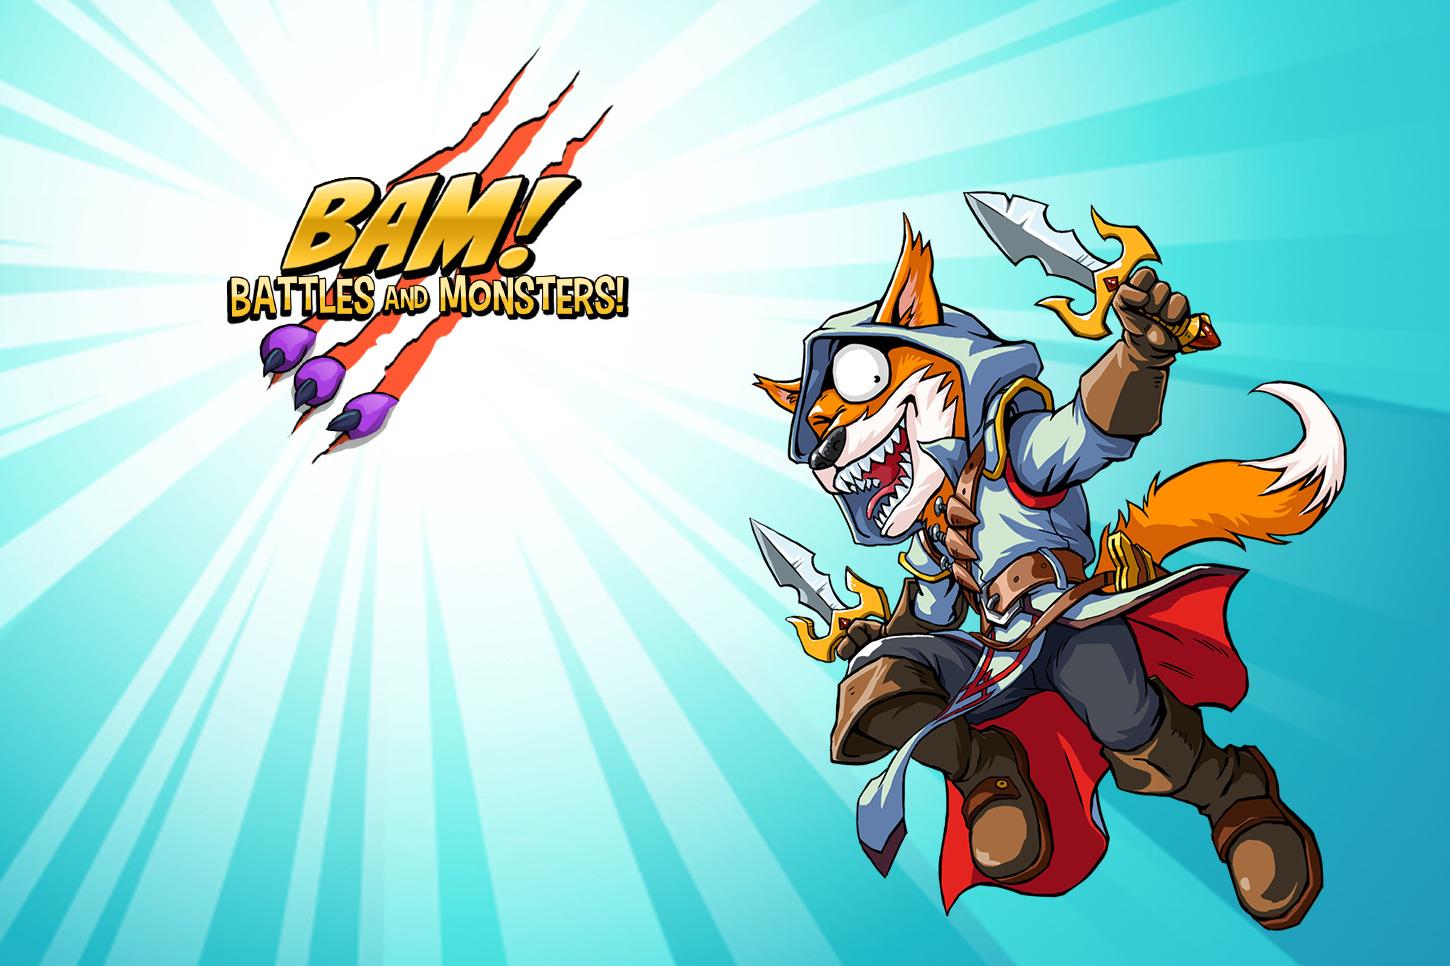 UI for Aeria Game's (Gamigo) mobile game: BAM! Battles and Monsters